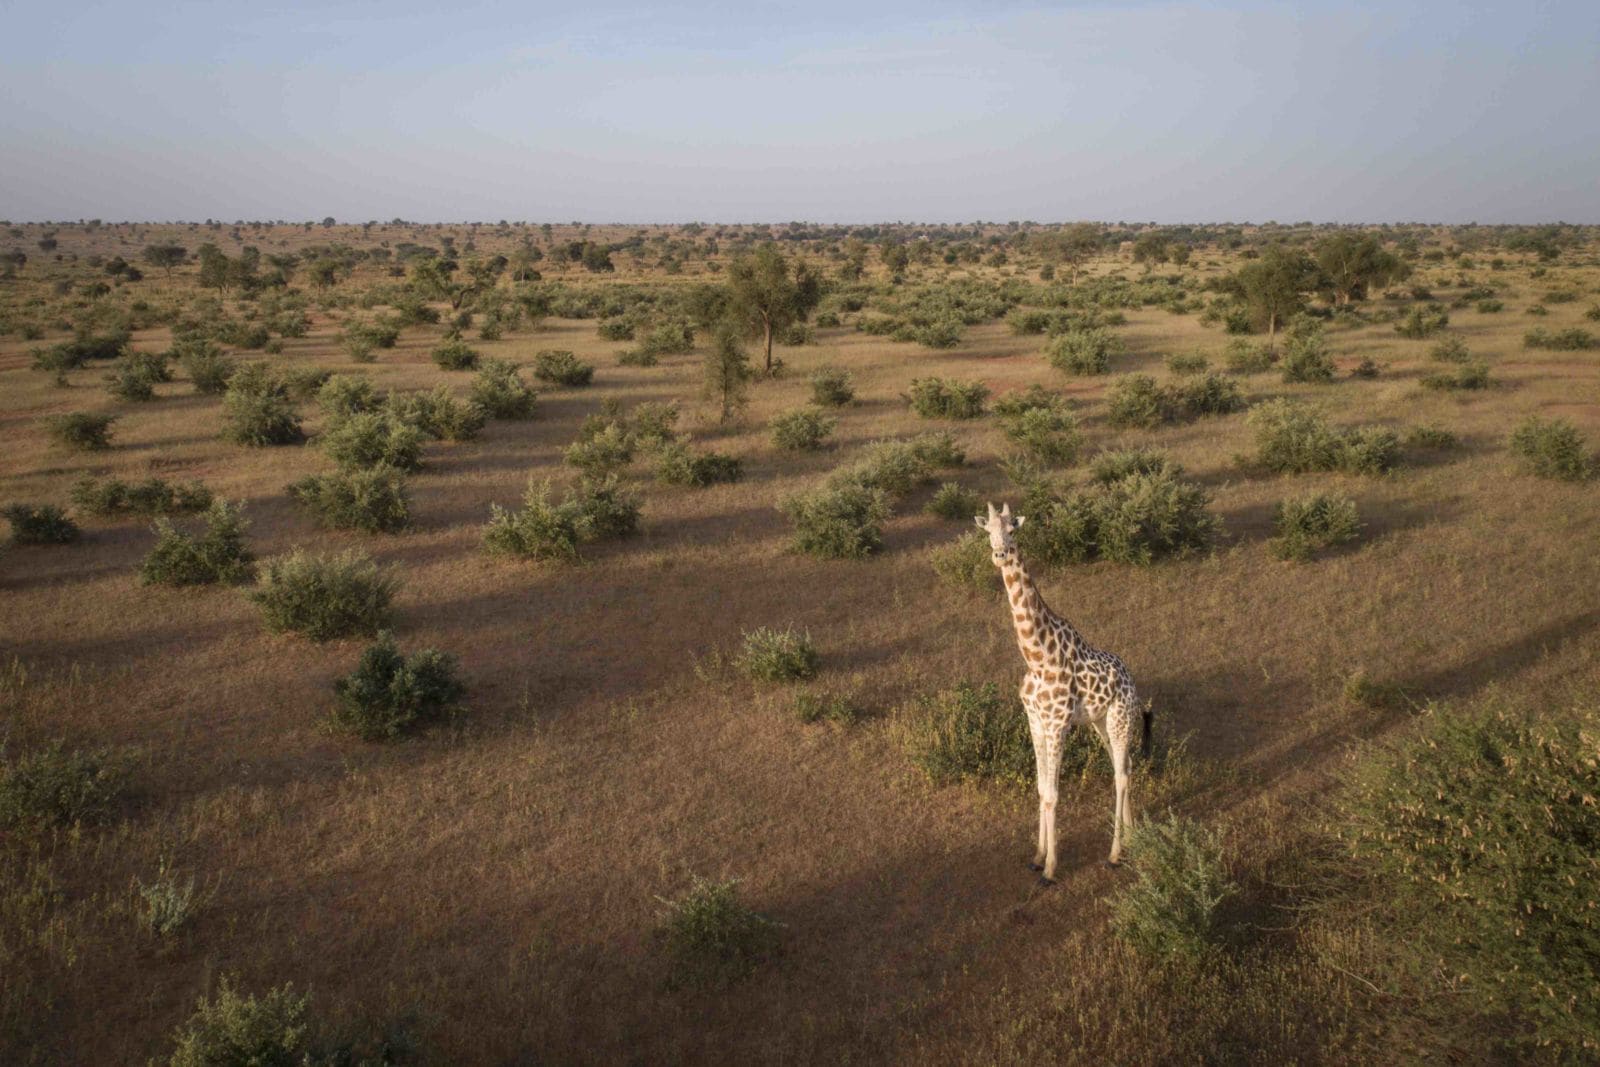 Saving giraffe from extinction is a tall order